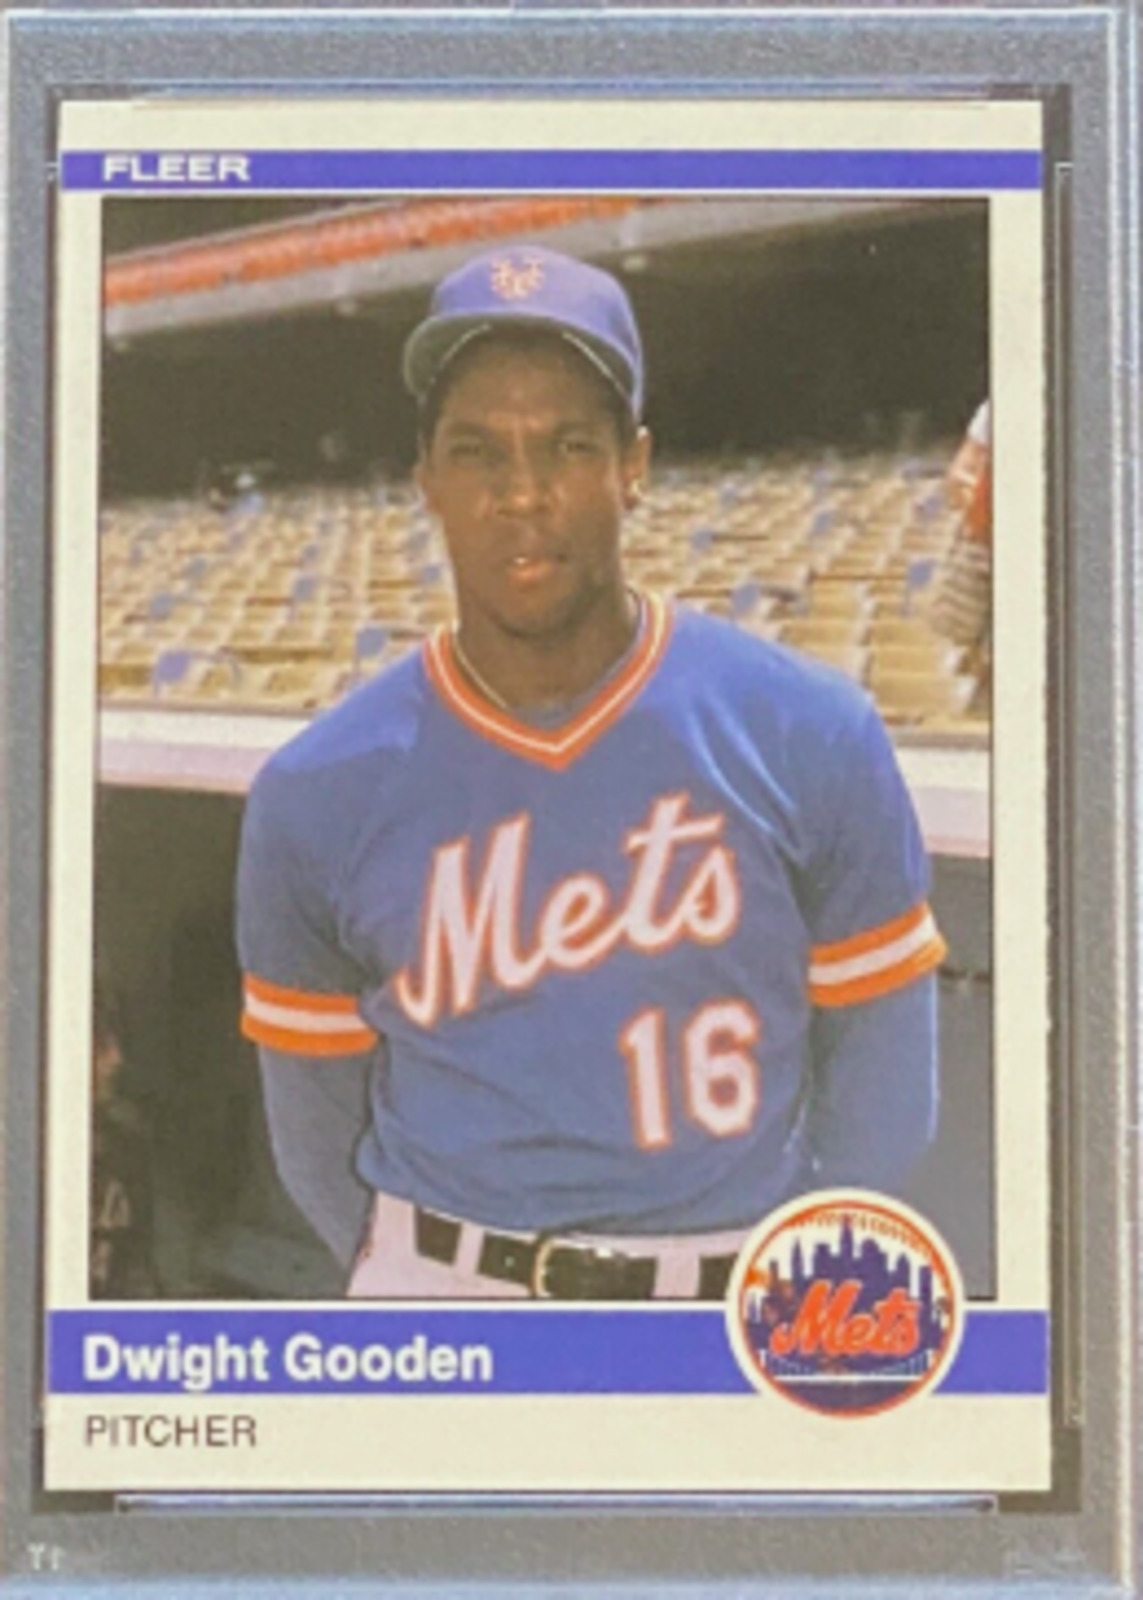 1984 Fleer Update Dwight Gooden rookie card